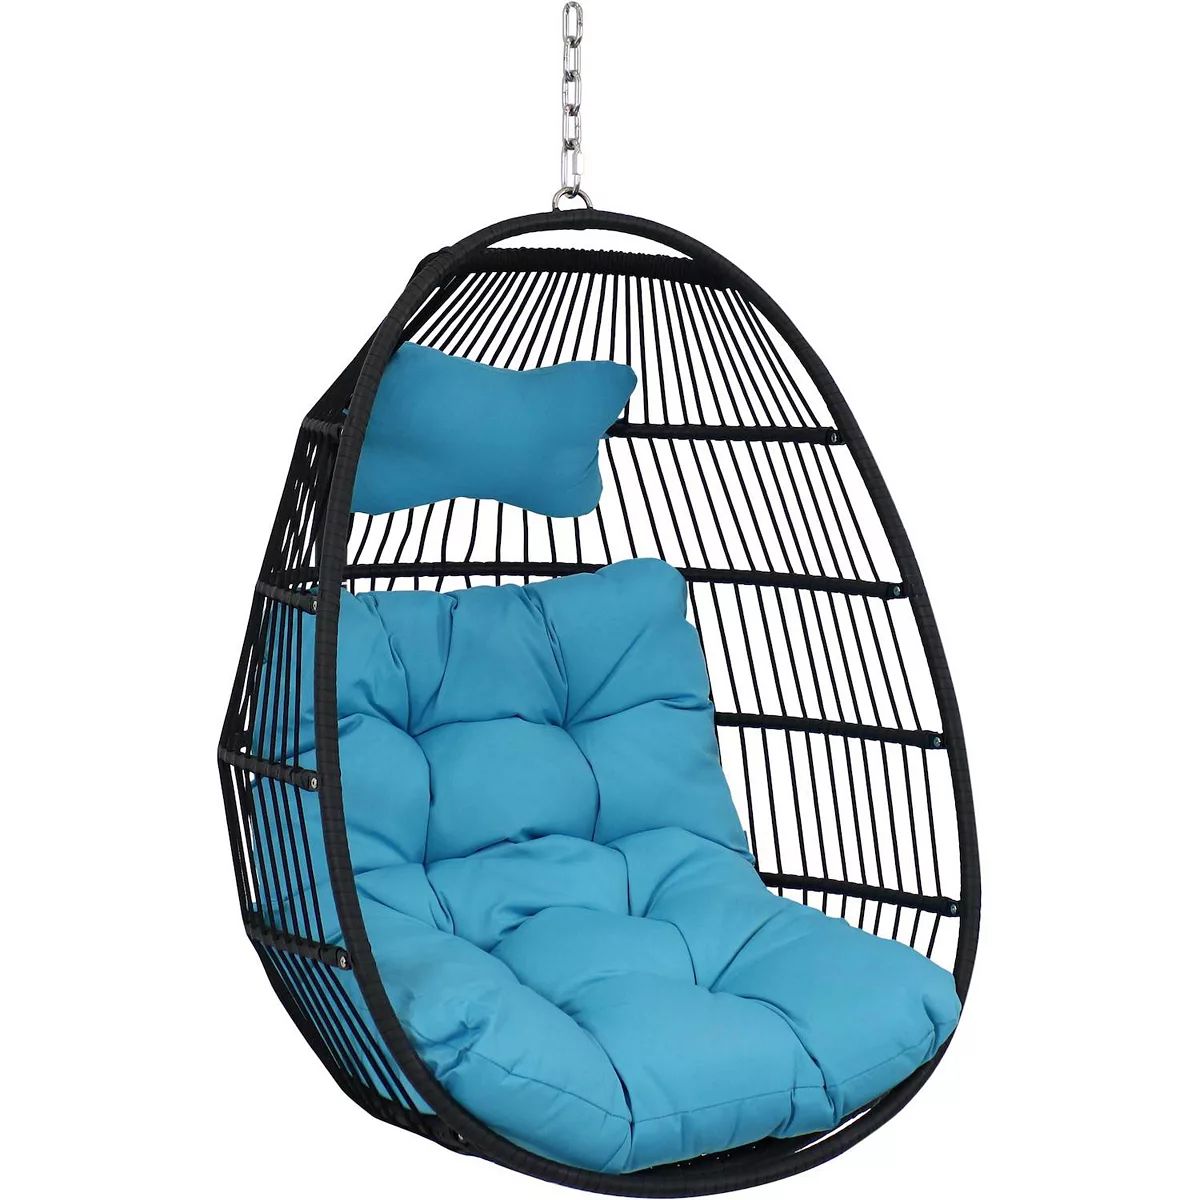 Sunnydaze Black Polyethylene Wicker Hanging Egg Chair with Cushions - Blue | Kohl's